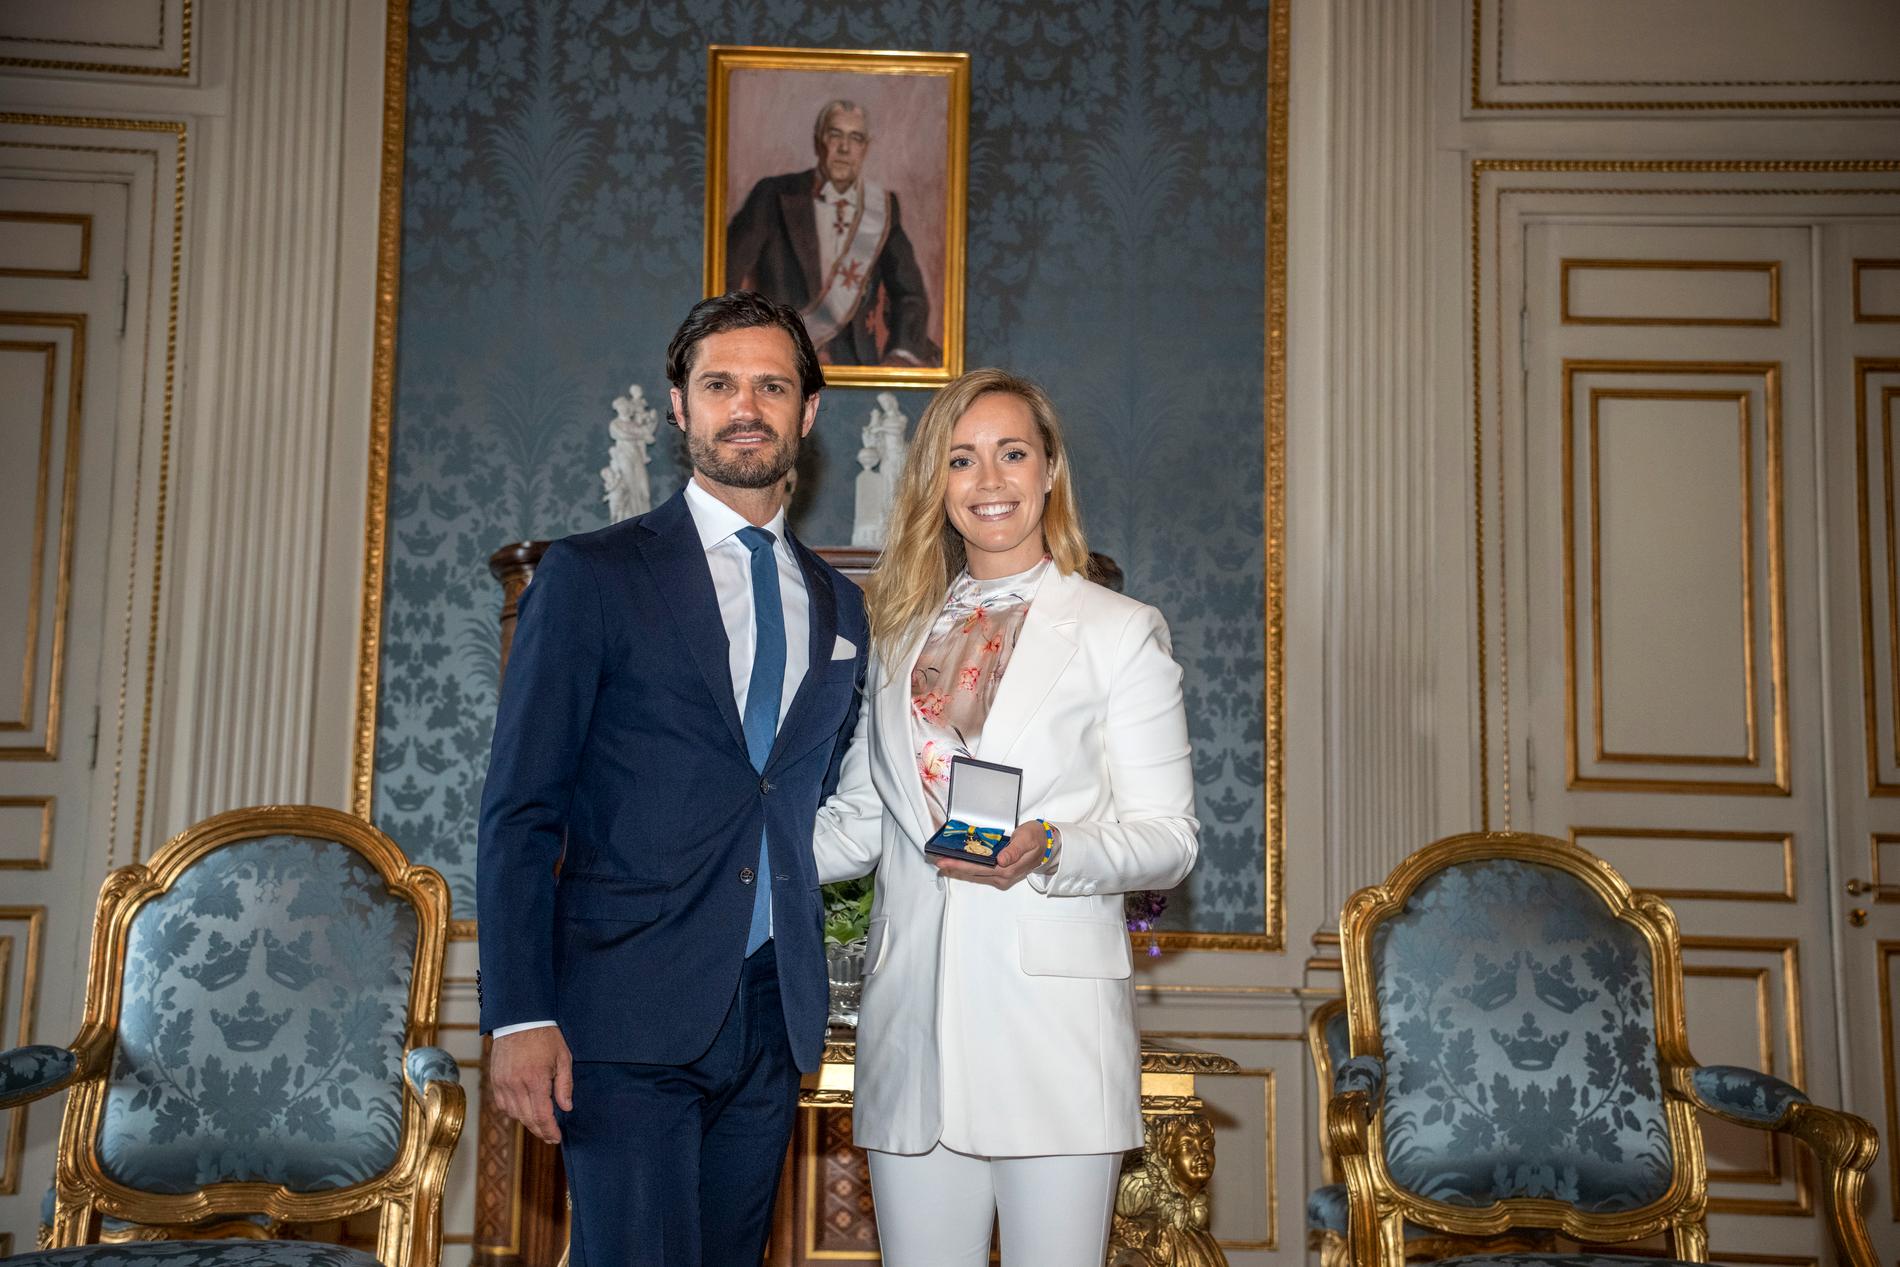 Mikaela Åhlin-Kottulinsky tilldelas Motorprinsens medalj av prins Carl Philip.